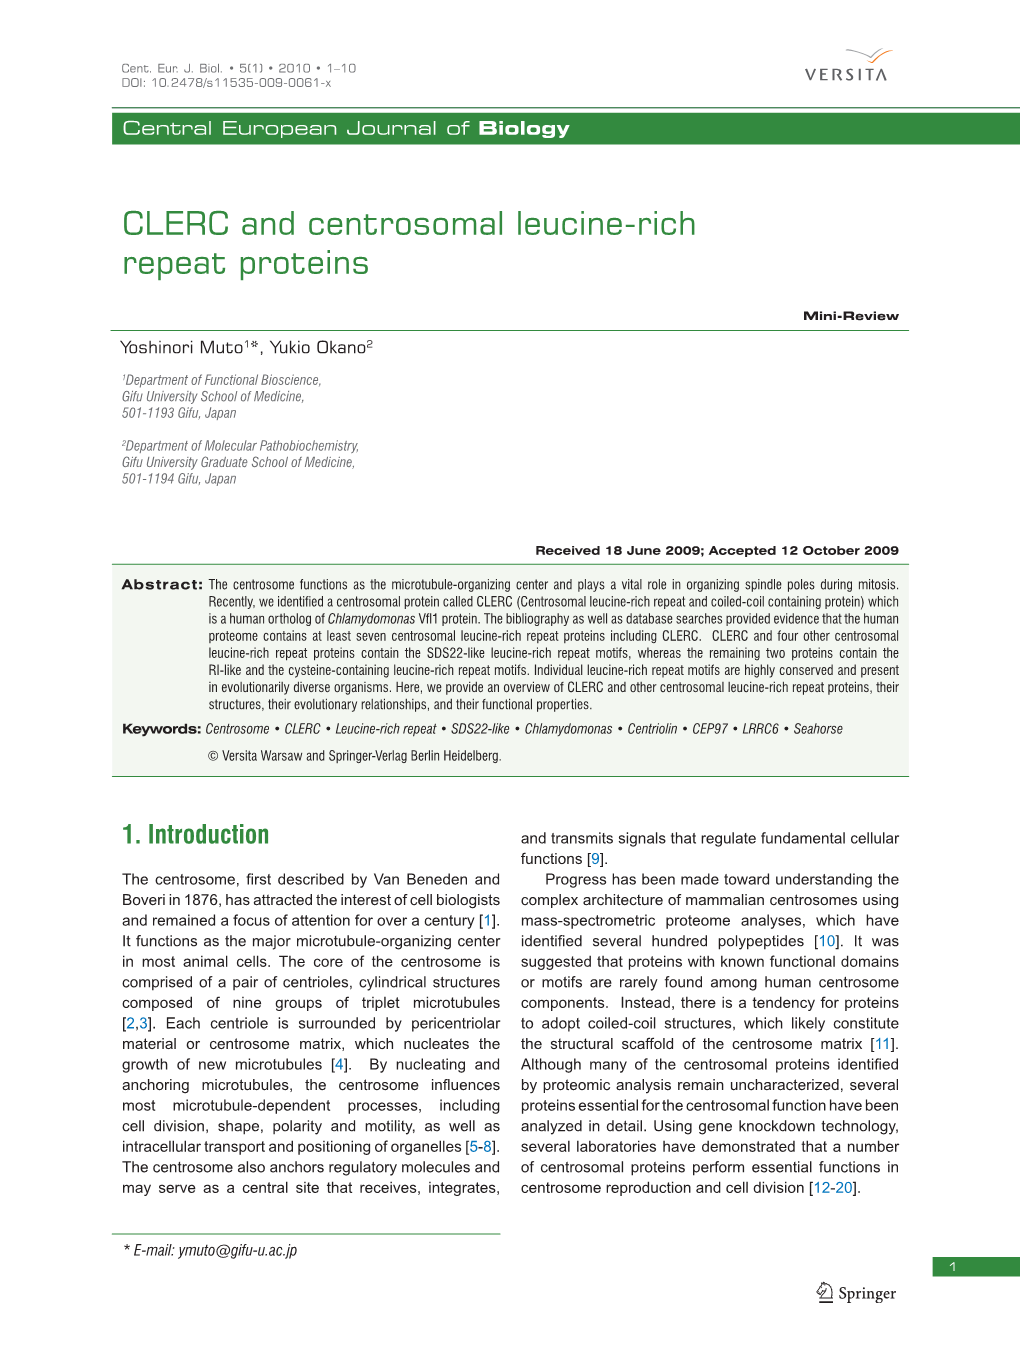 CLERC and Centrosomal Leucine-Rich Repeat Proteins